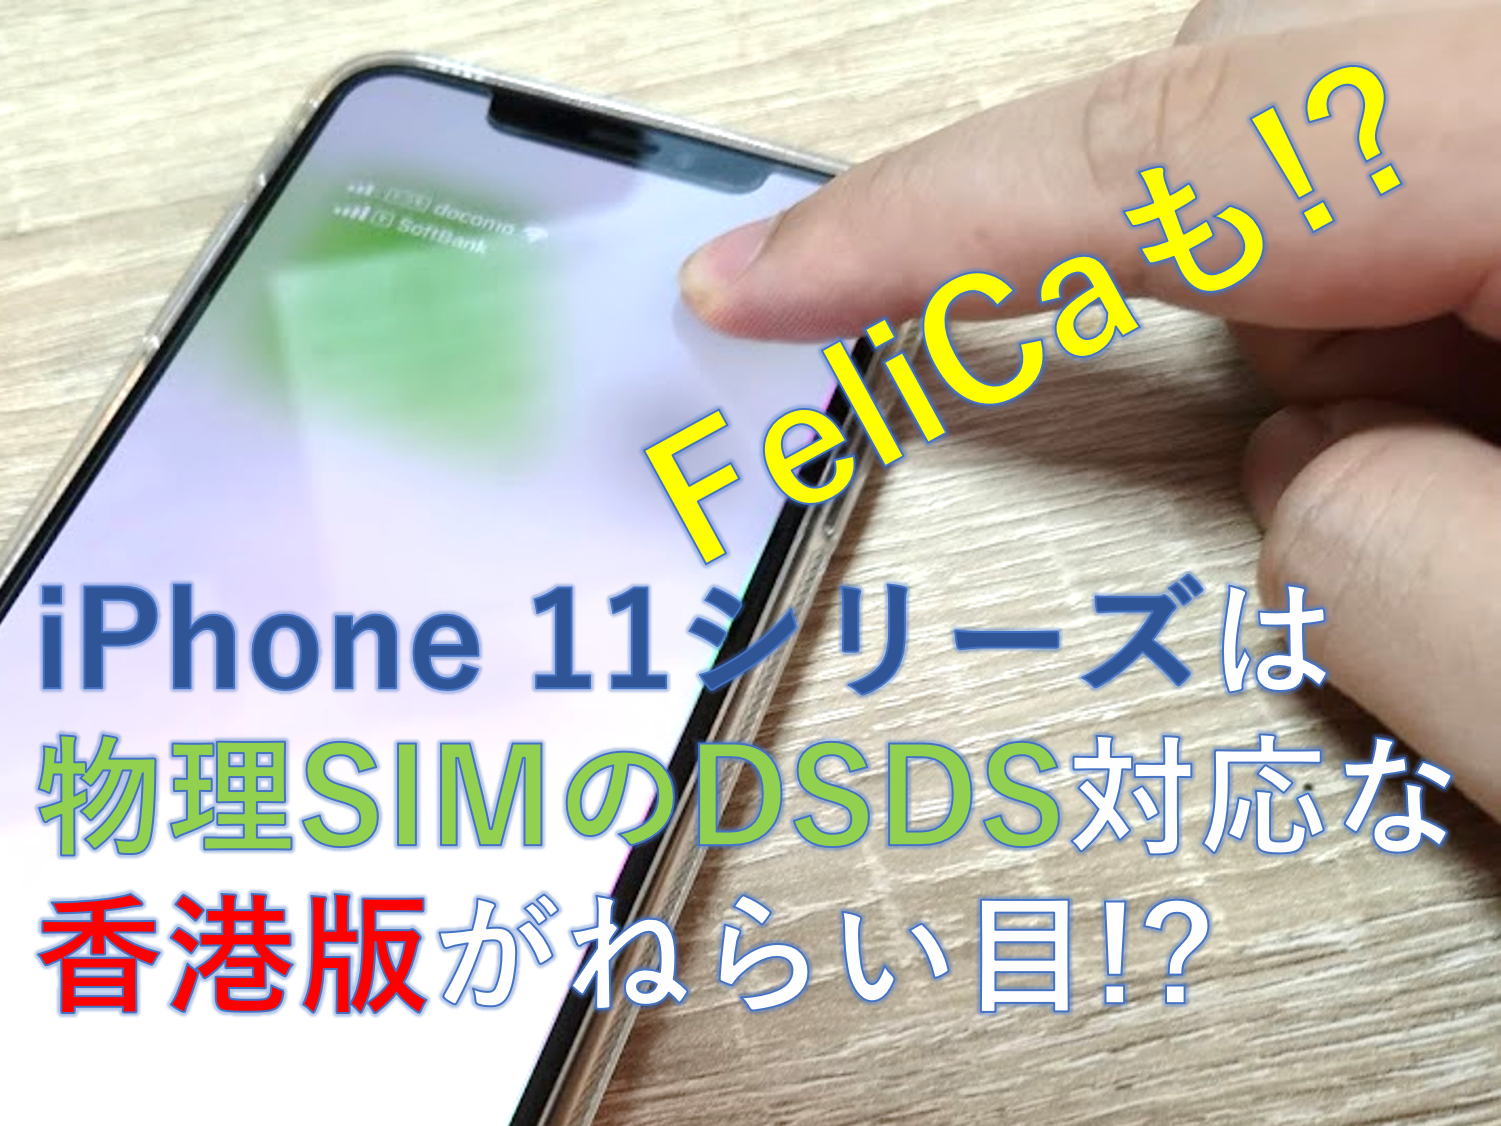 ETOREN/イオシス発売】香港版iPhone 11シリーズは物理SIMのDSDSに対応 